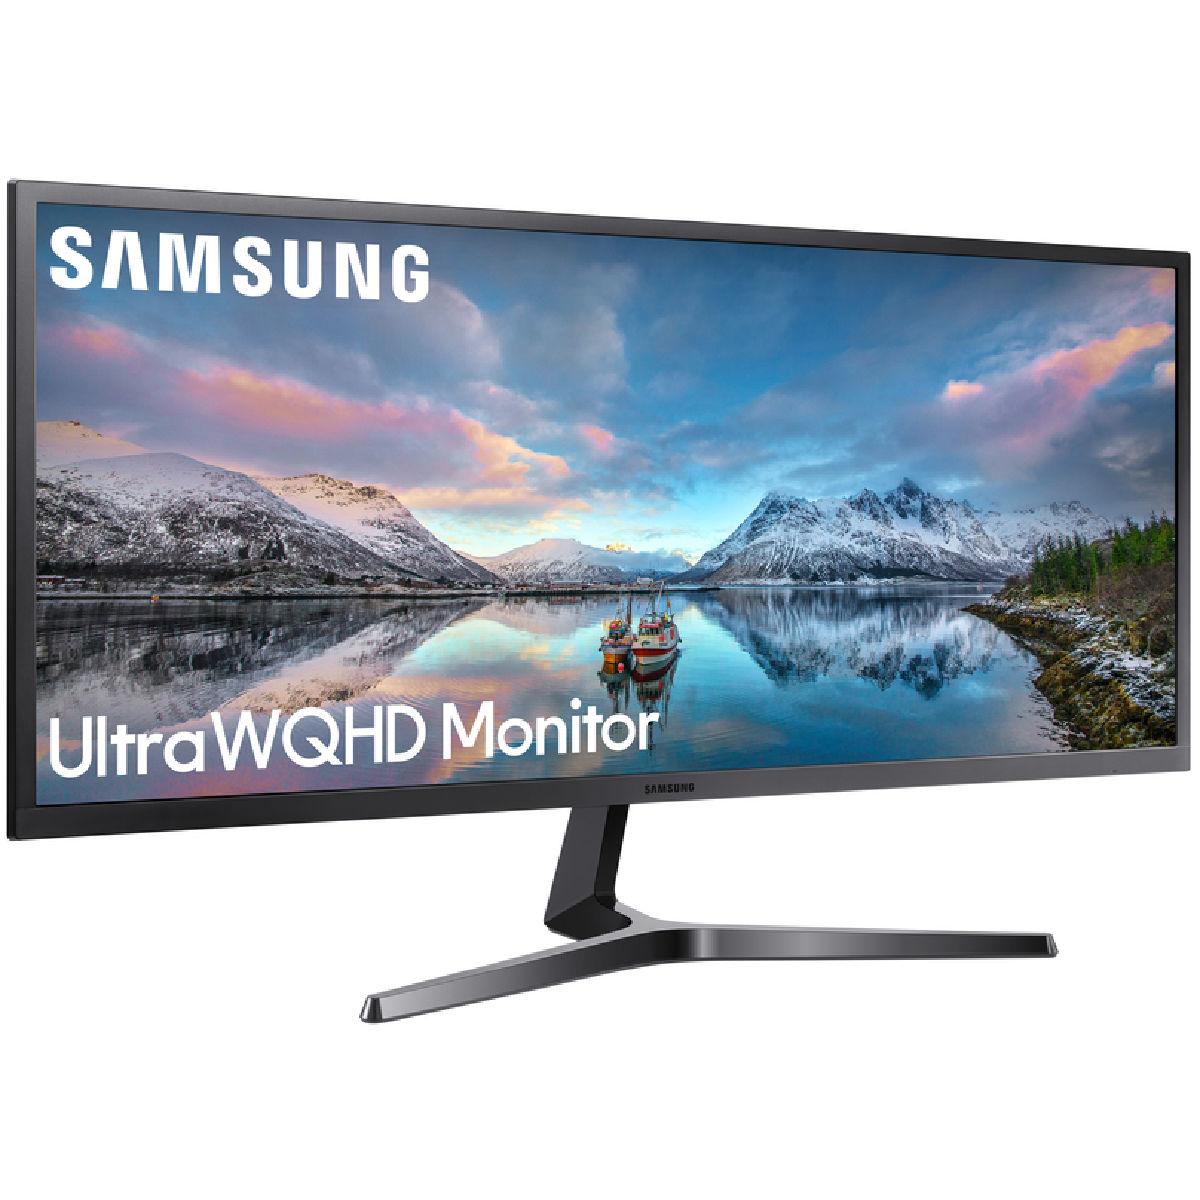 SAMSUNG LS34J552WQNXZA 34-Inch Flat LED Ultra WQHD Monitor